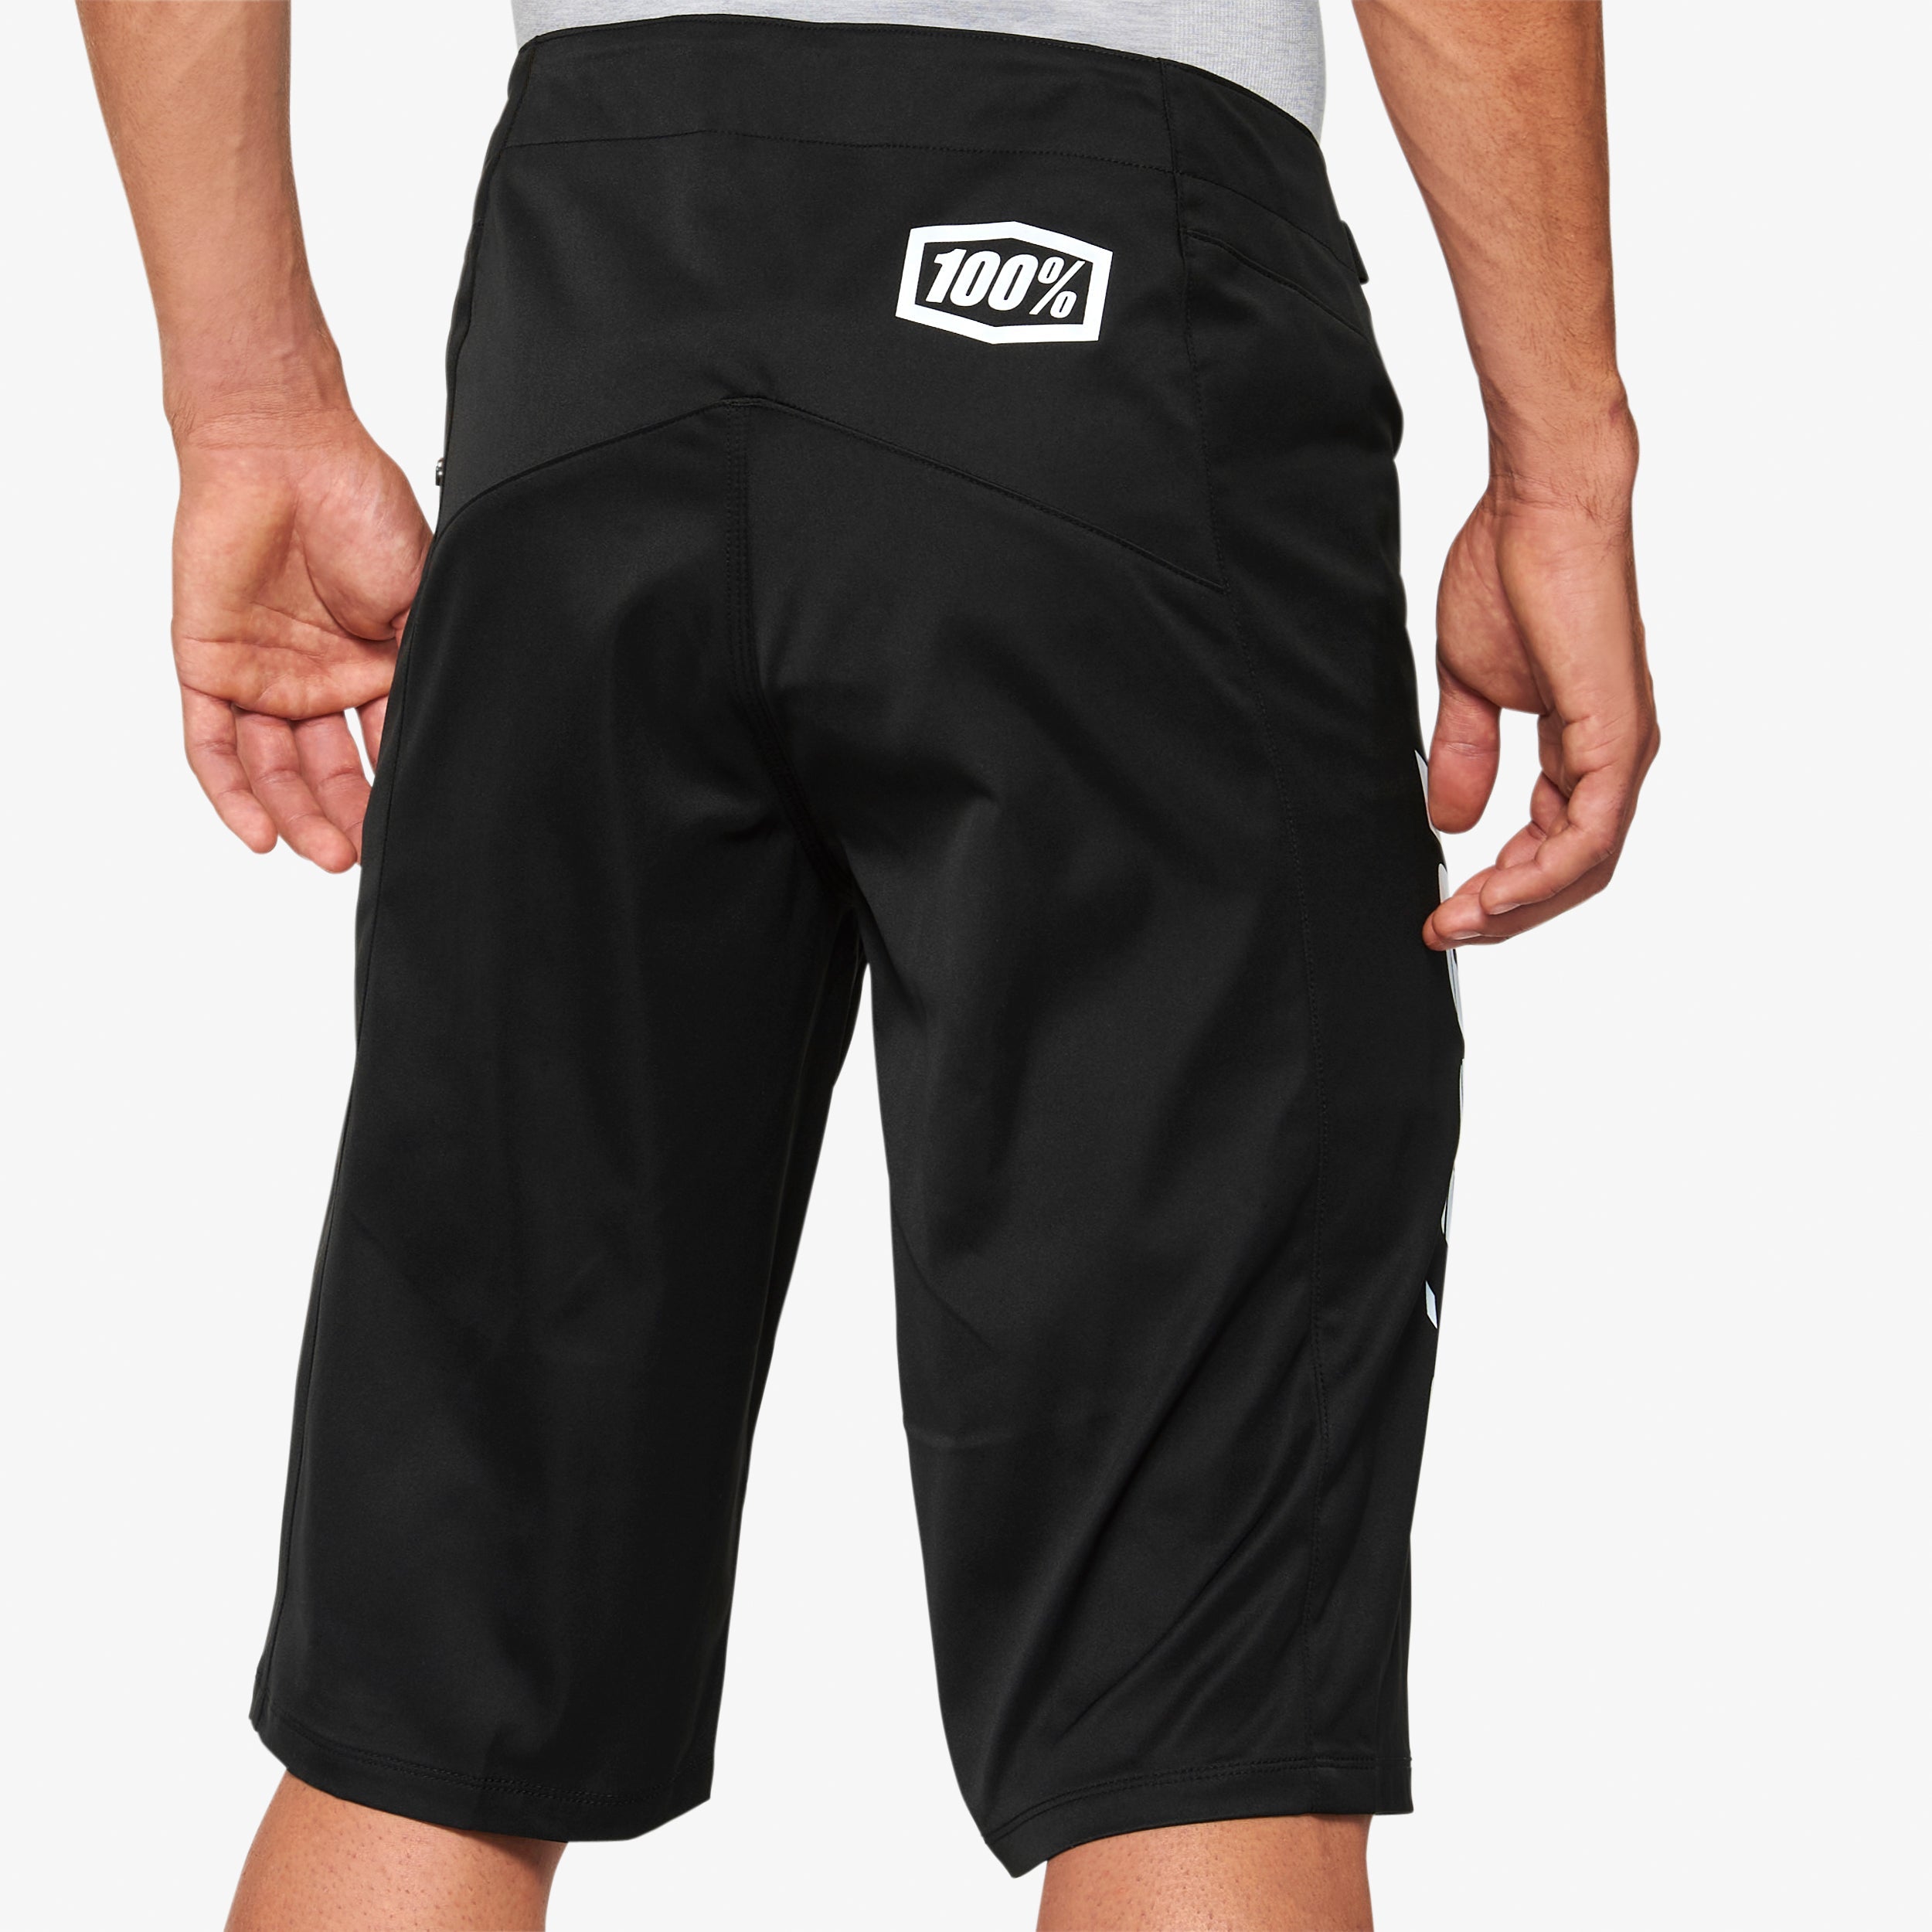 Men's MTB Shorts and Pants - Mountain Bike Men's Riding Bottoms – 100%